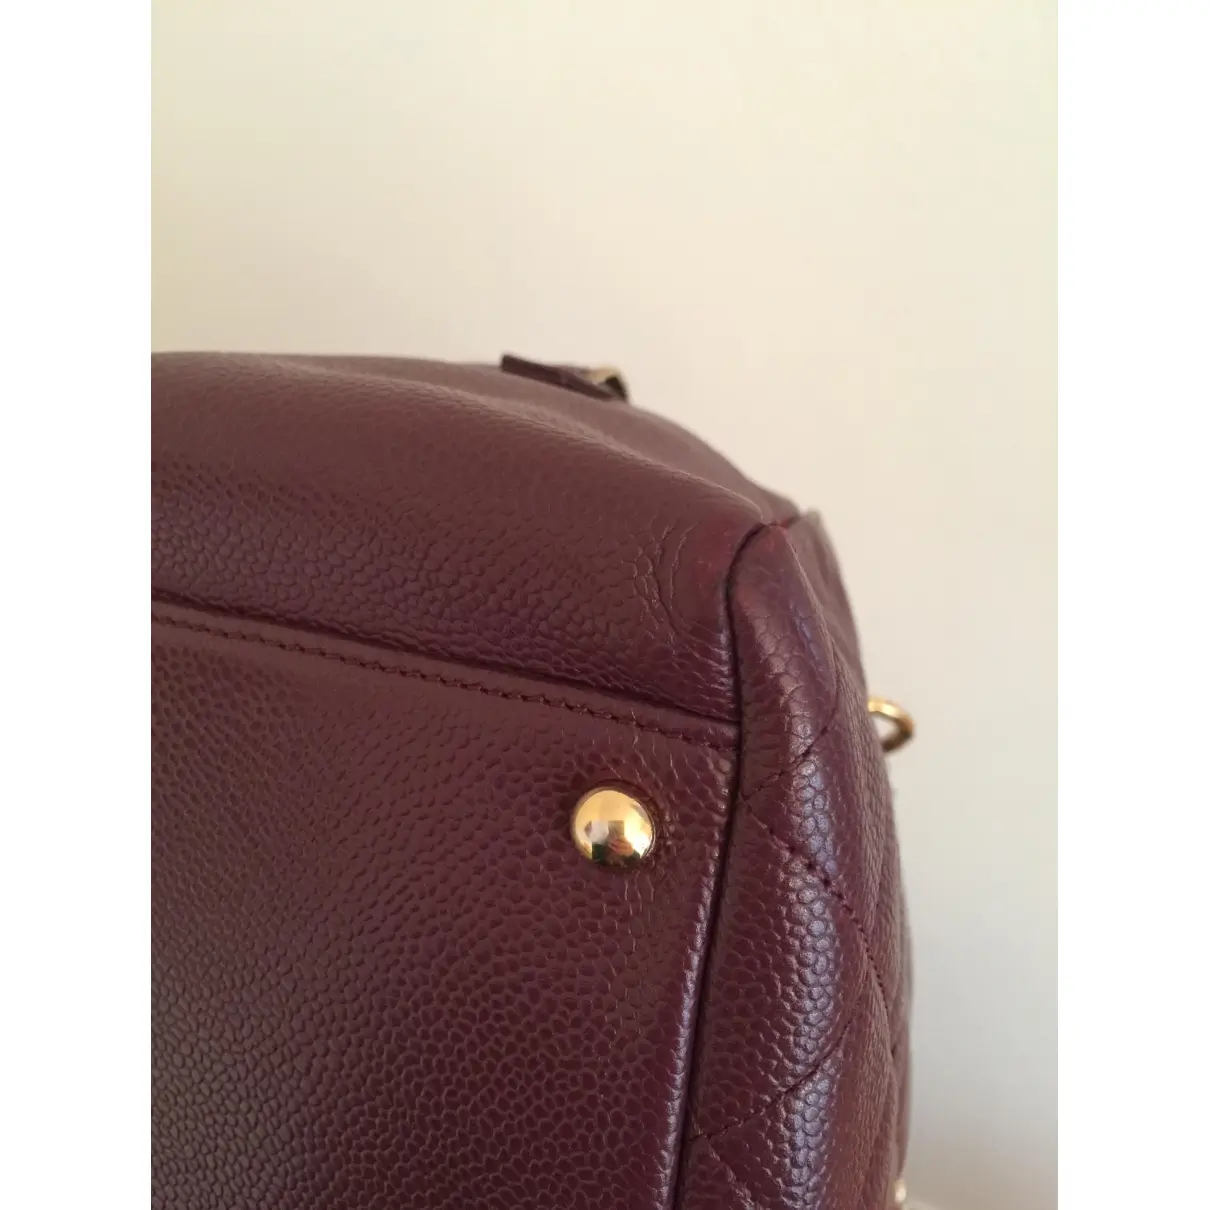 Buy Chanel Mini shopping leather handbag online - Vintage